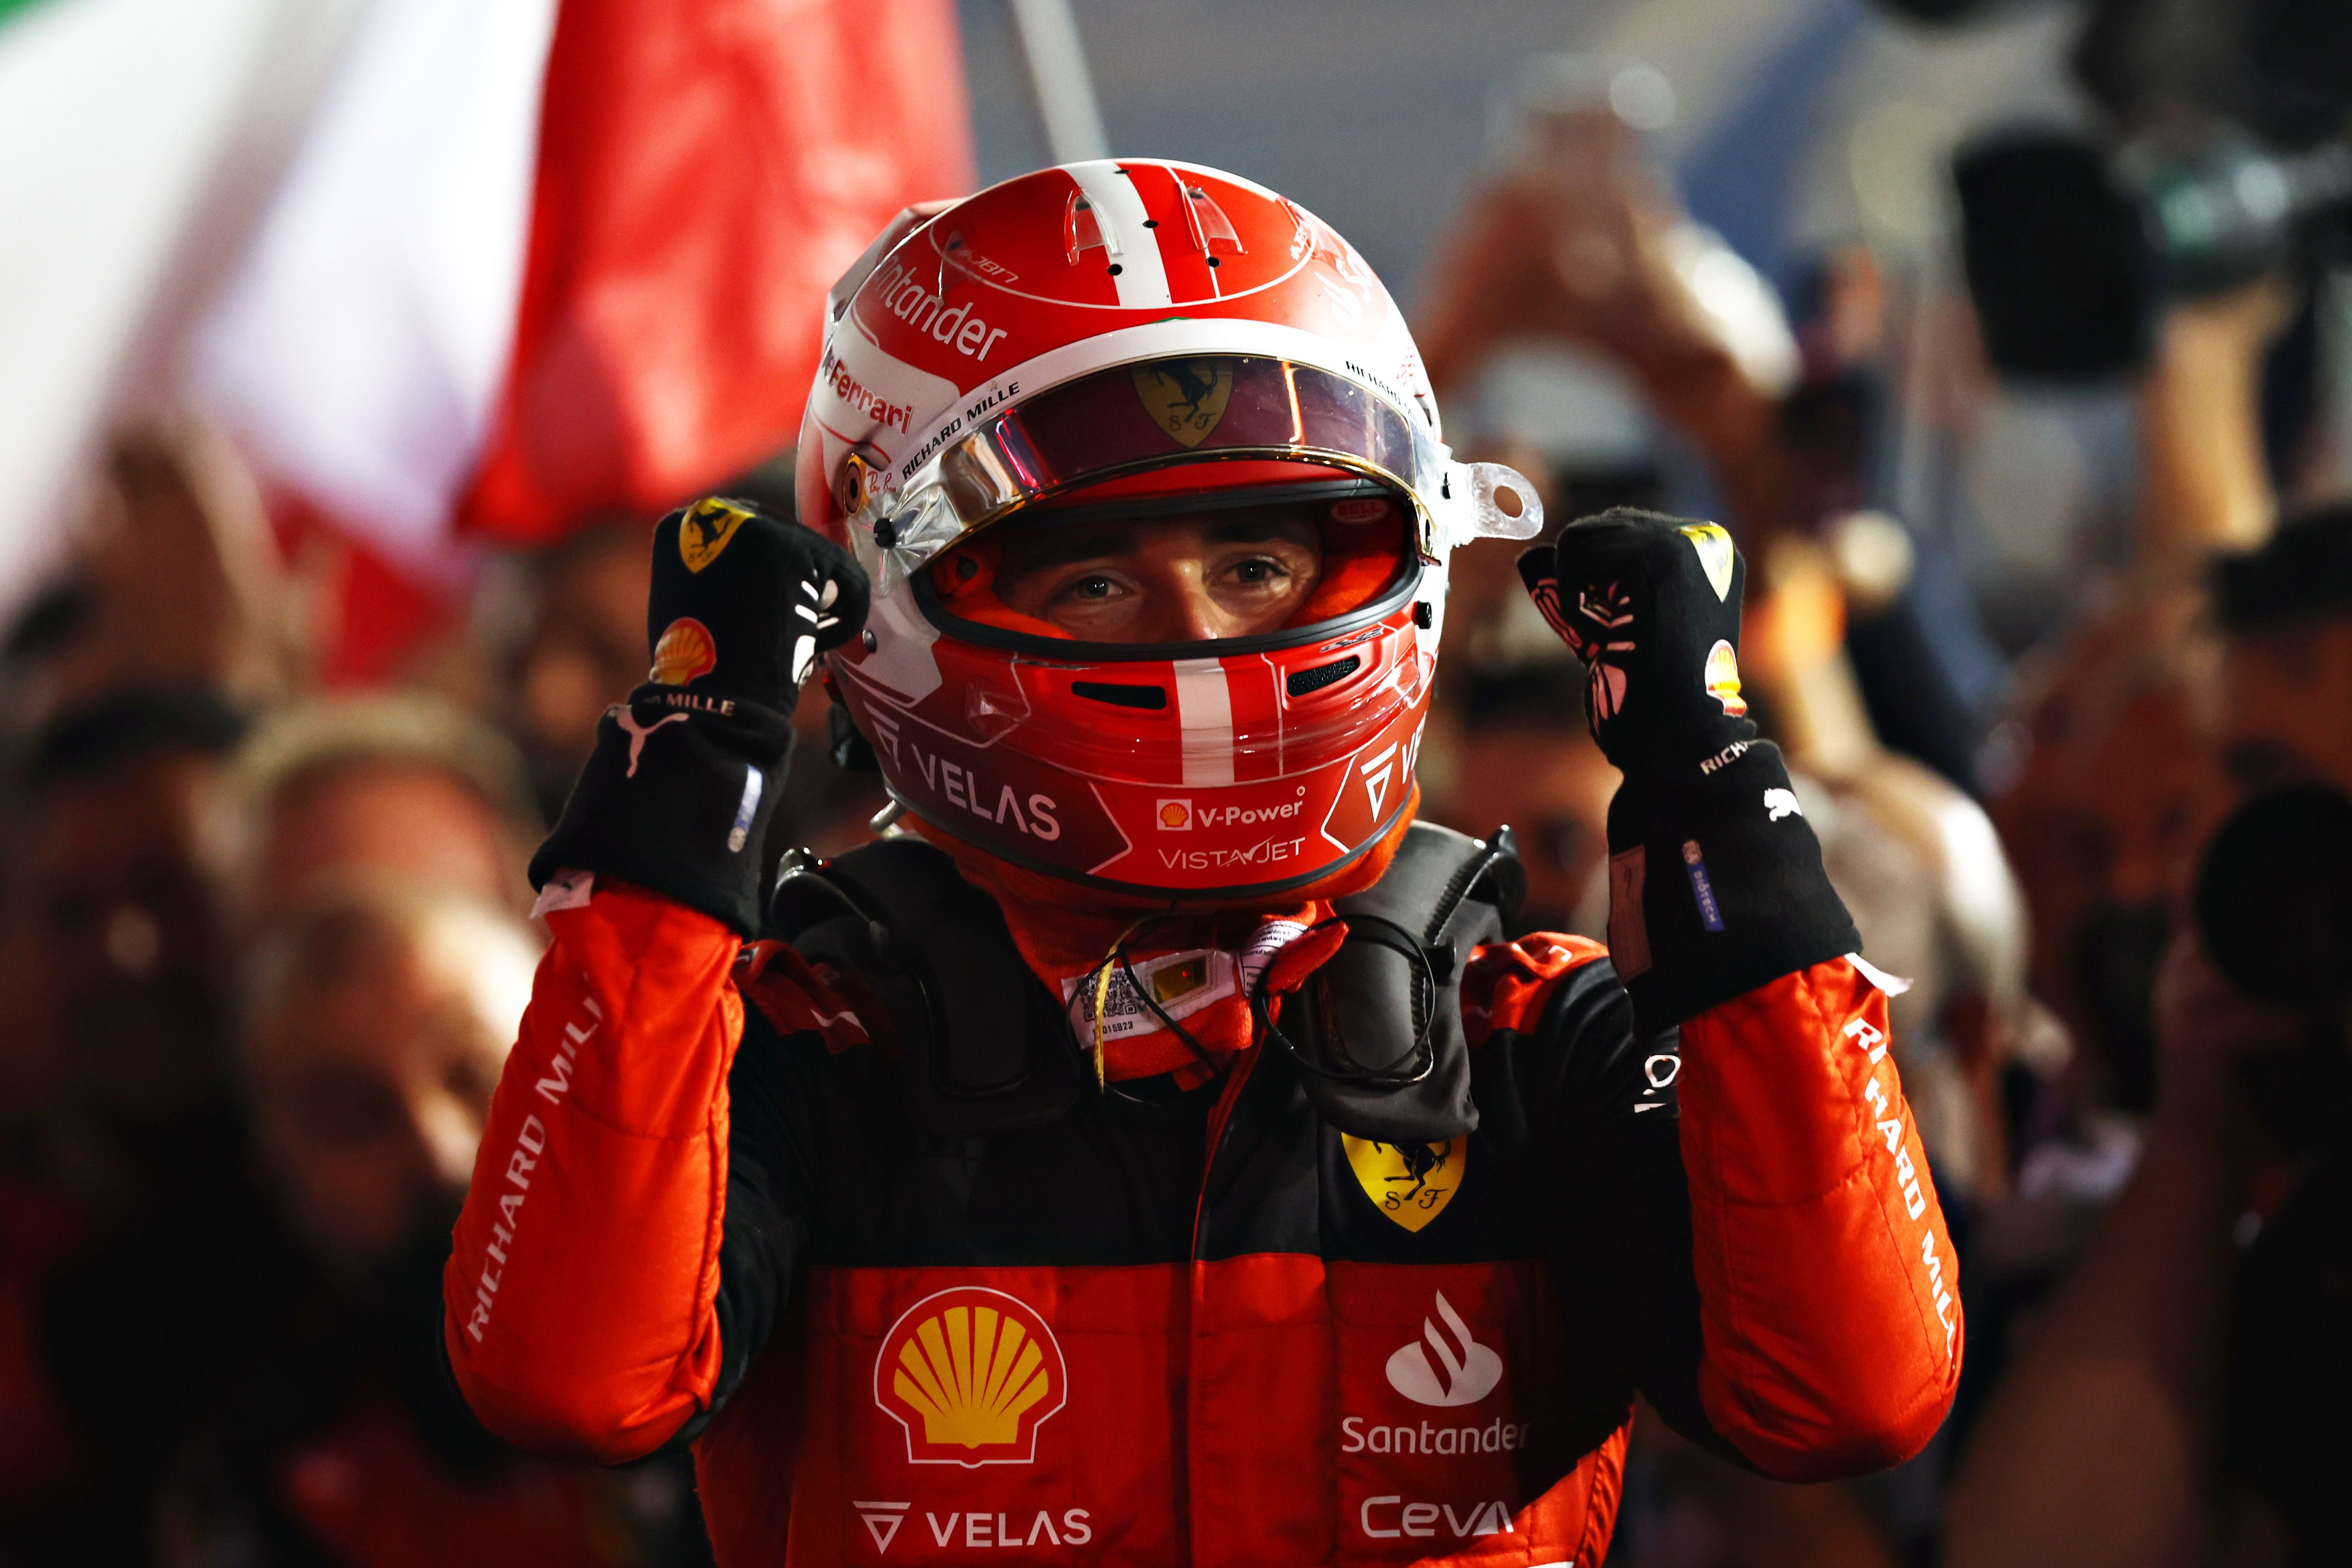 Bahrain Grand Prix: Ferrari dominates as Charles Leclerc wins dramatic season opener